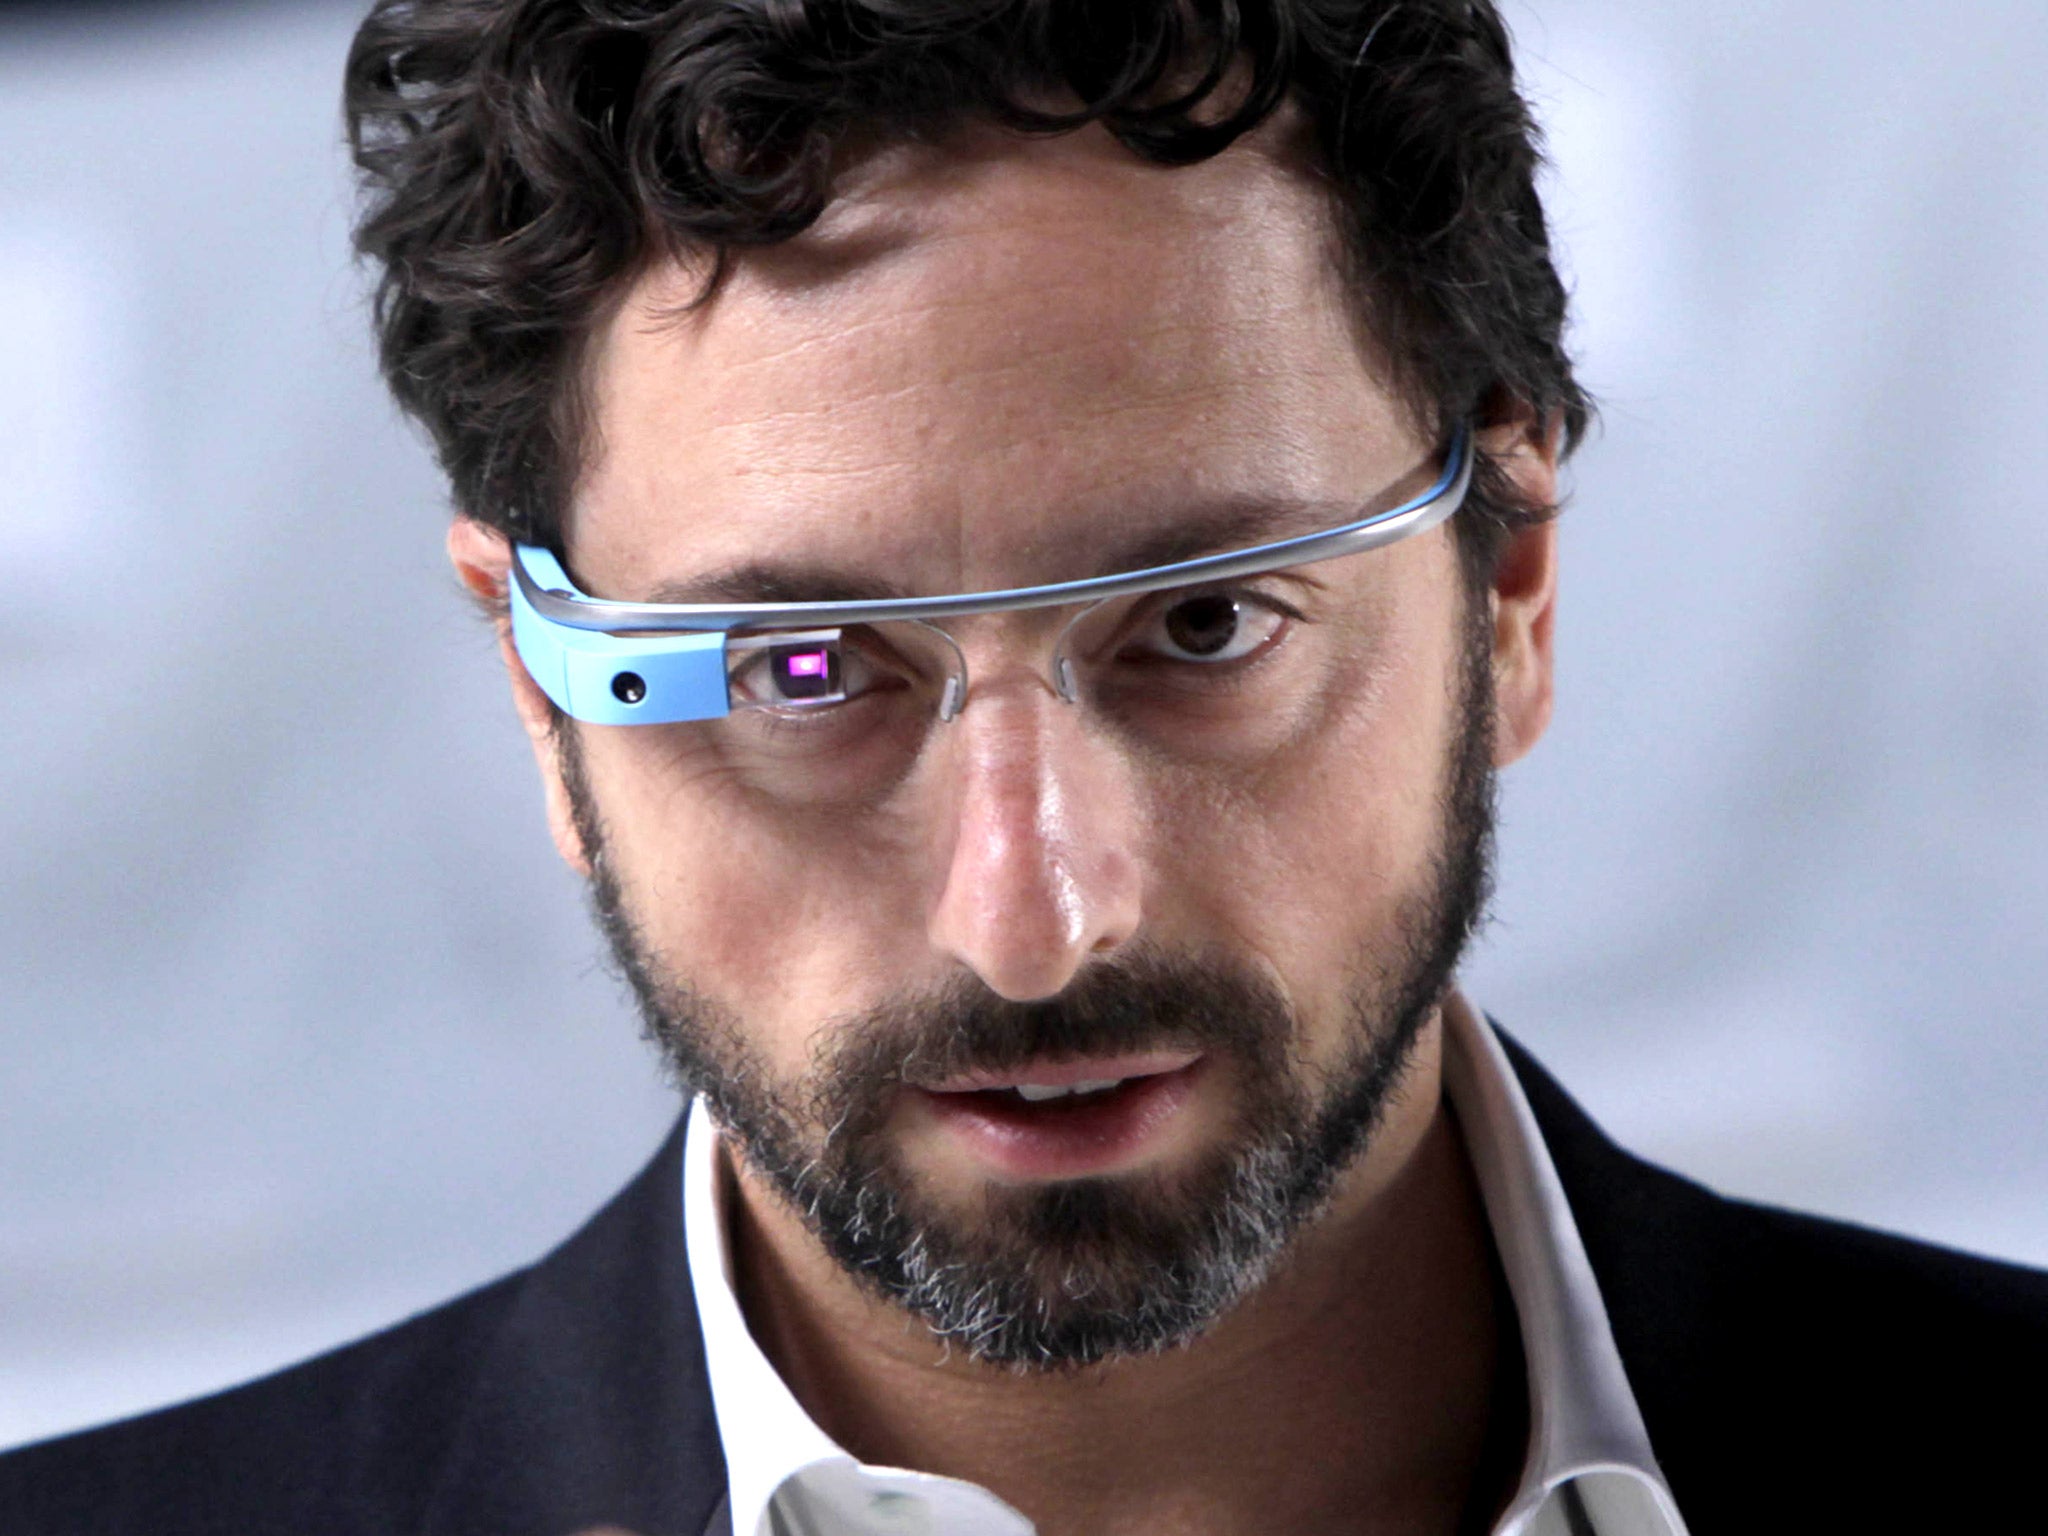 Google co-founder Sergey Brin demonstrates Google Glass